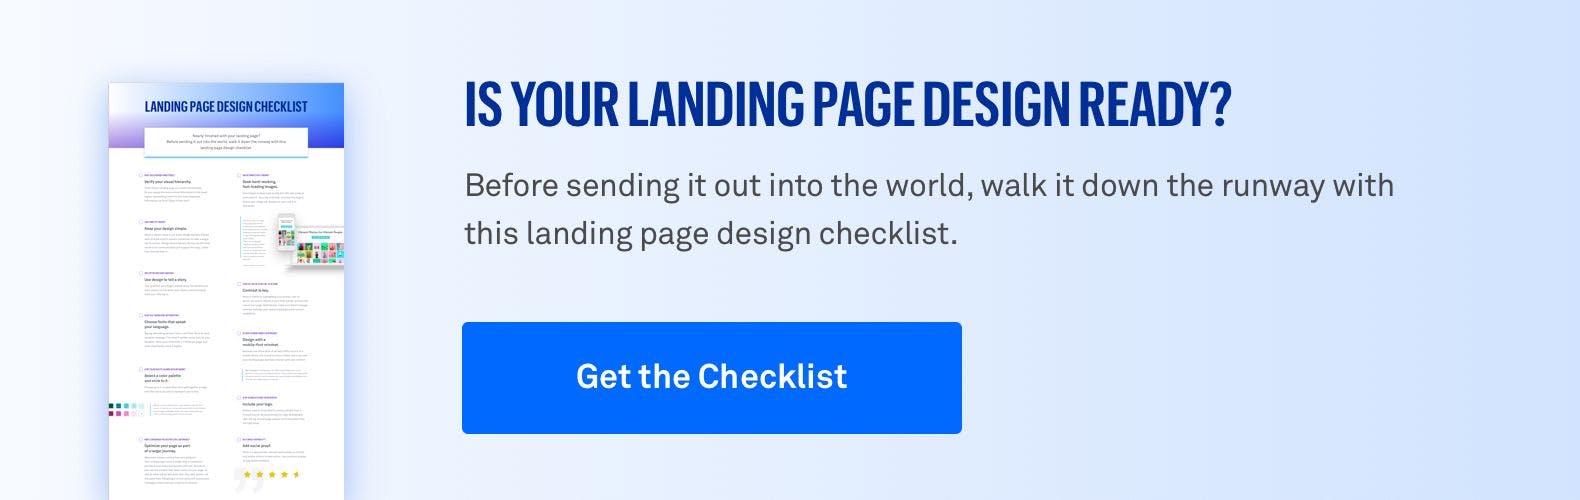 Get the Landing Page Design Checklist